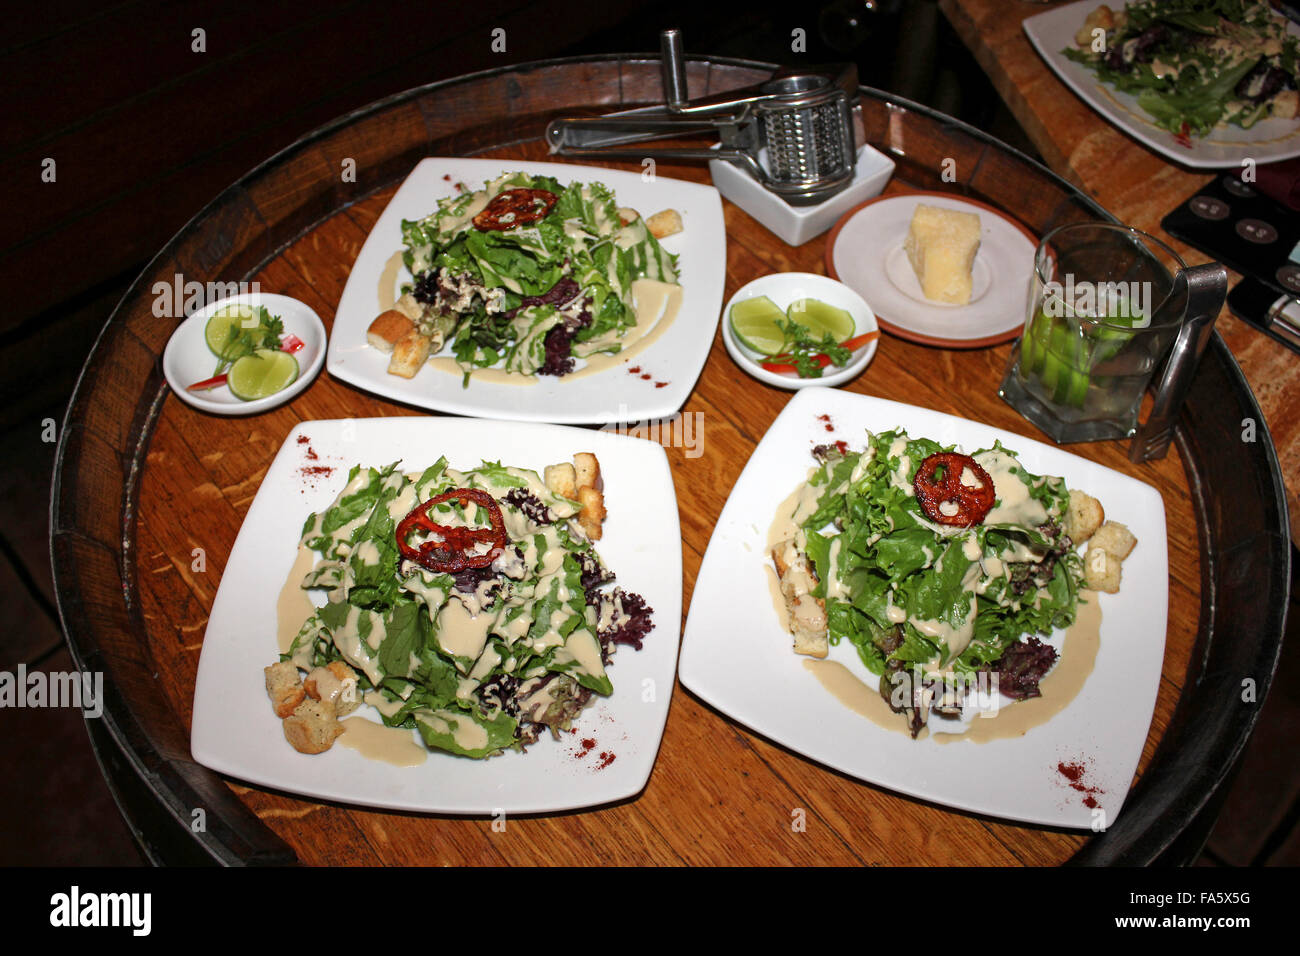 Plates Of Ensalada In a Peruvian Restaurant Stock Photo